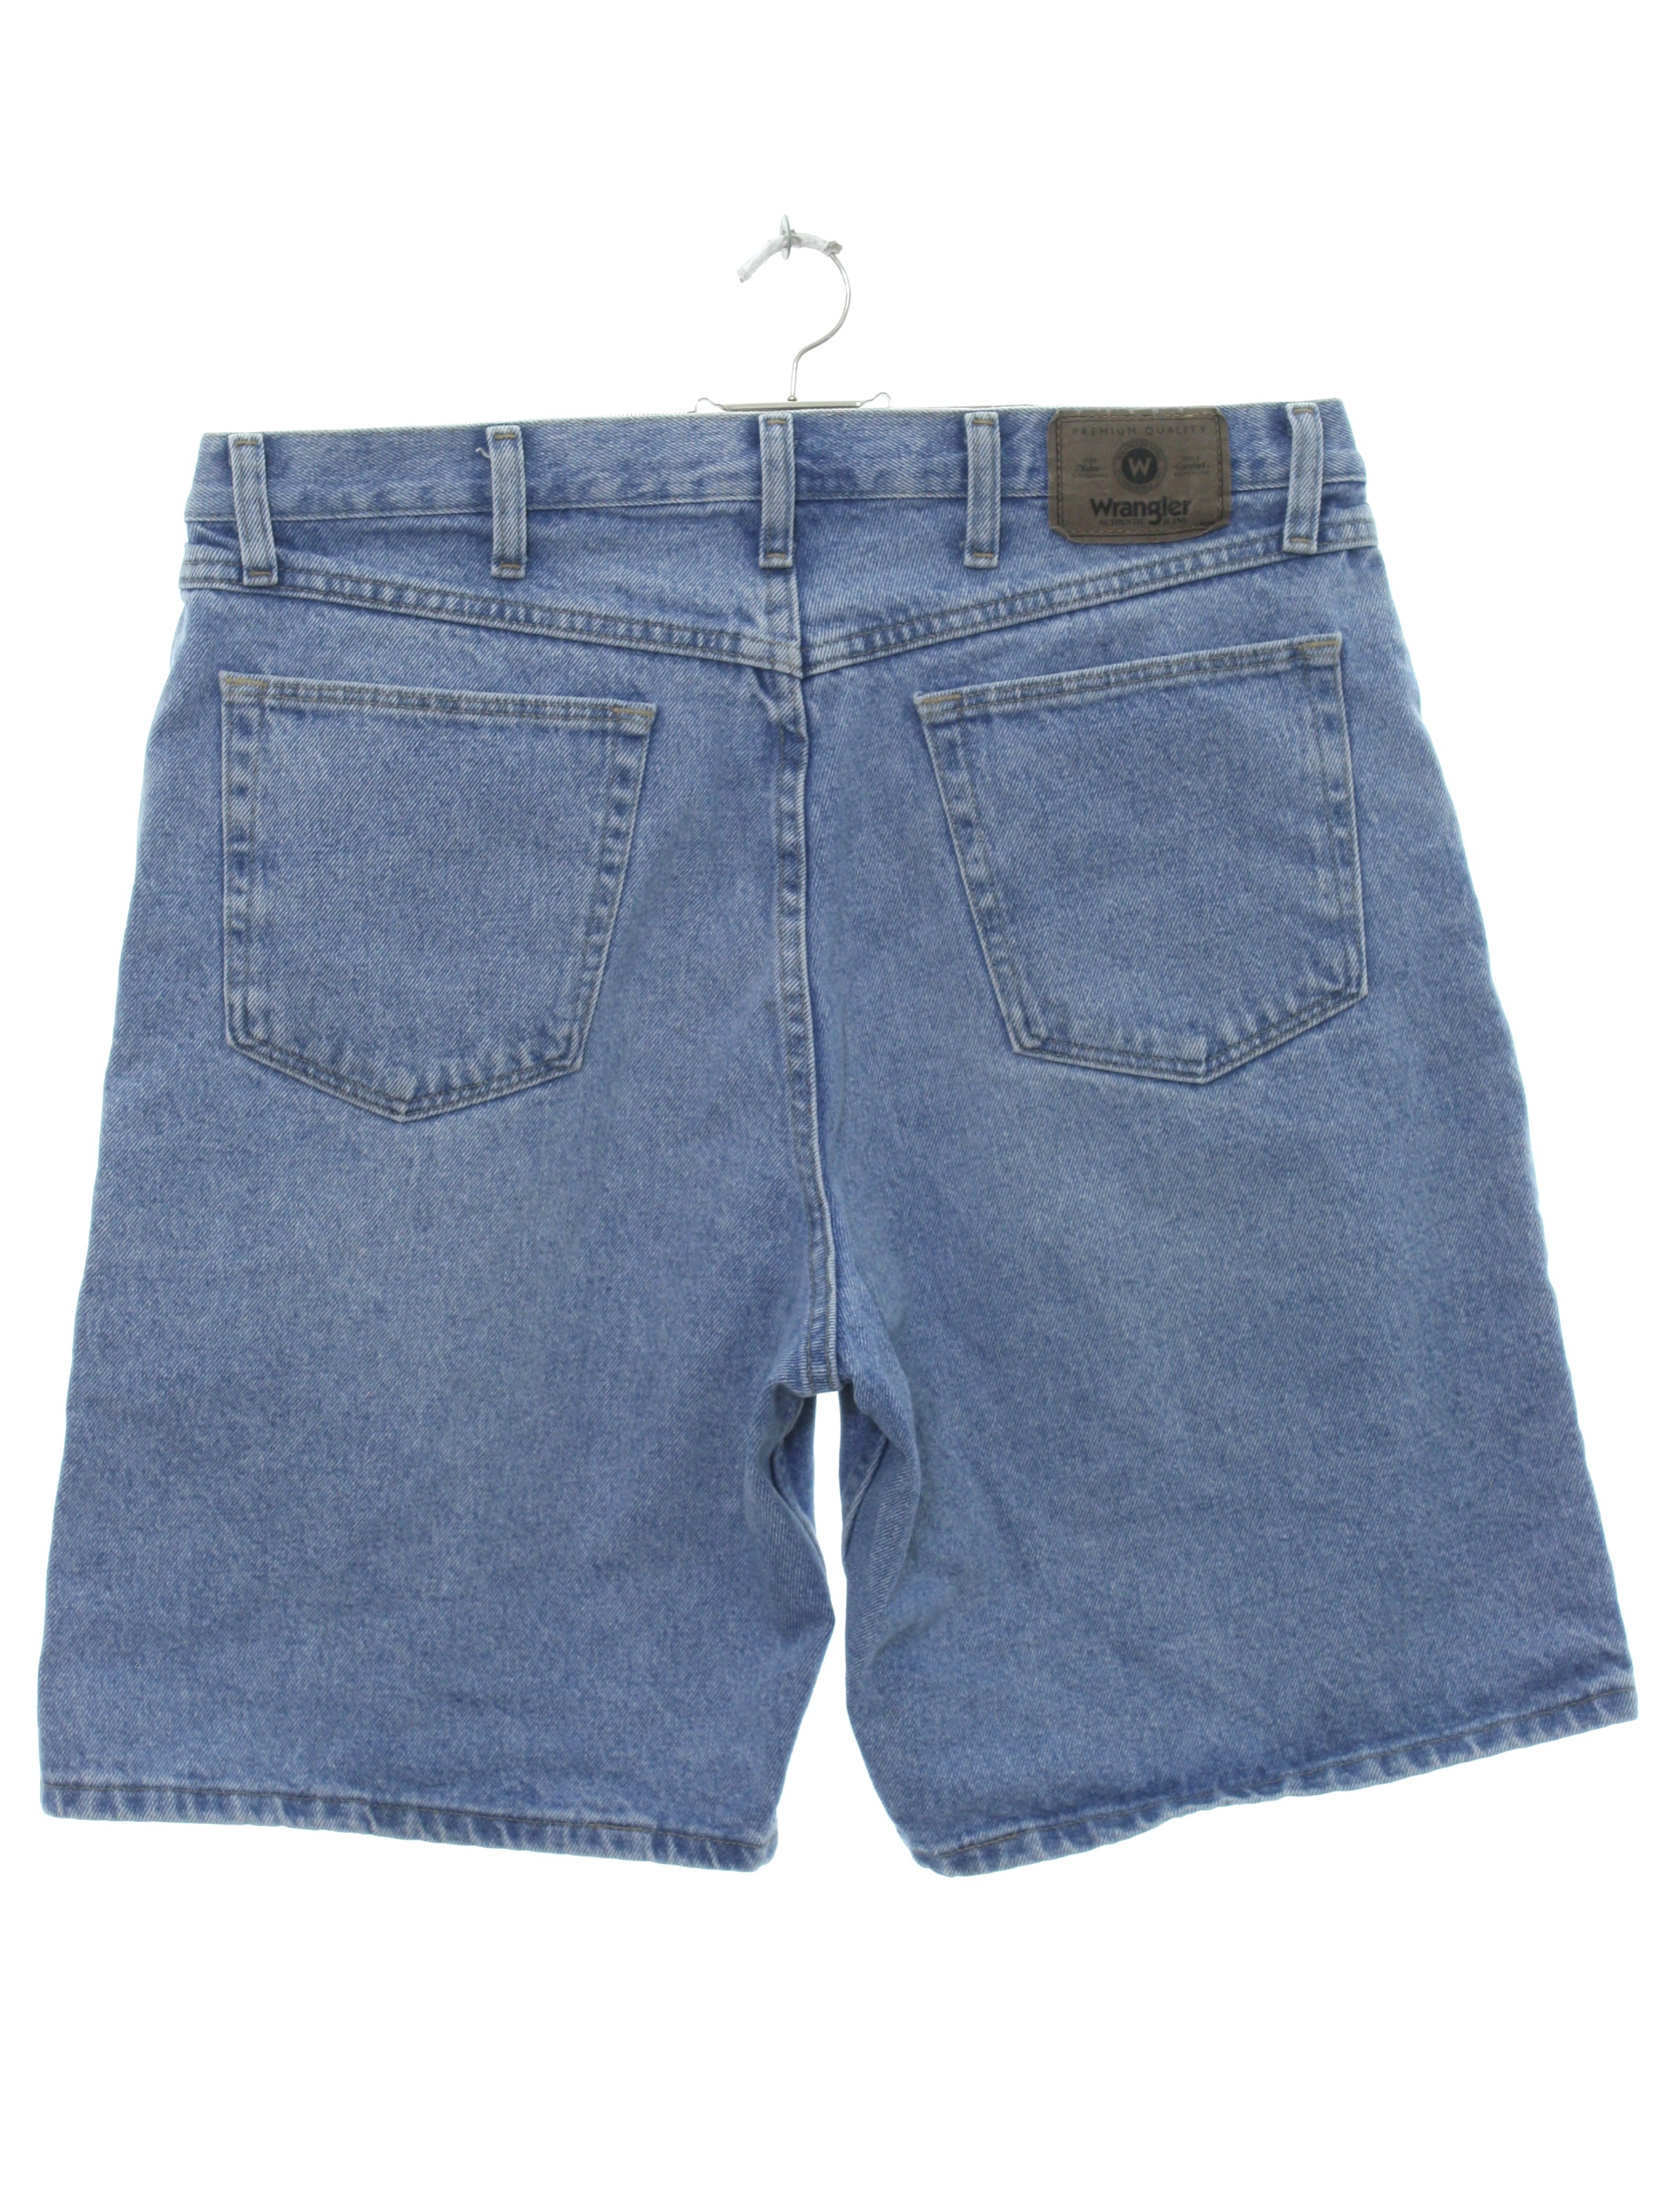 wrangler jean shorts mens